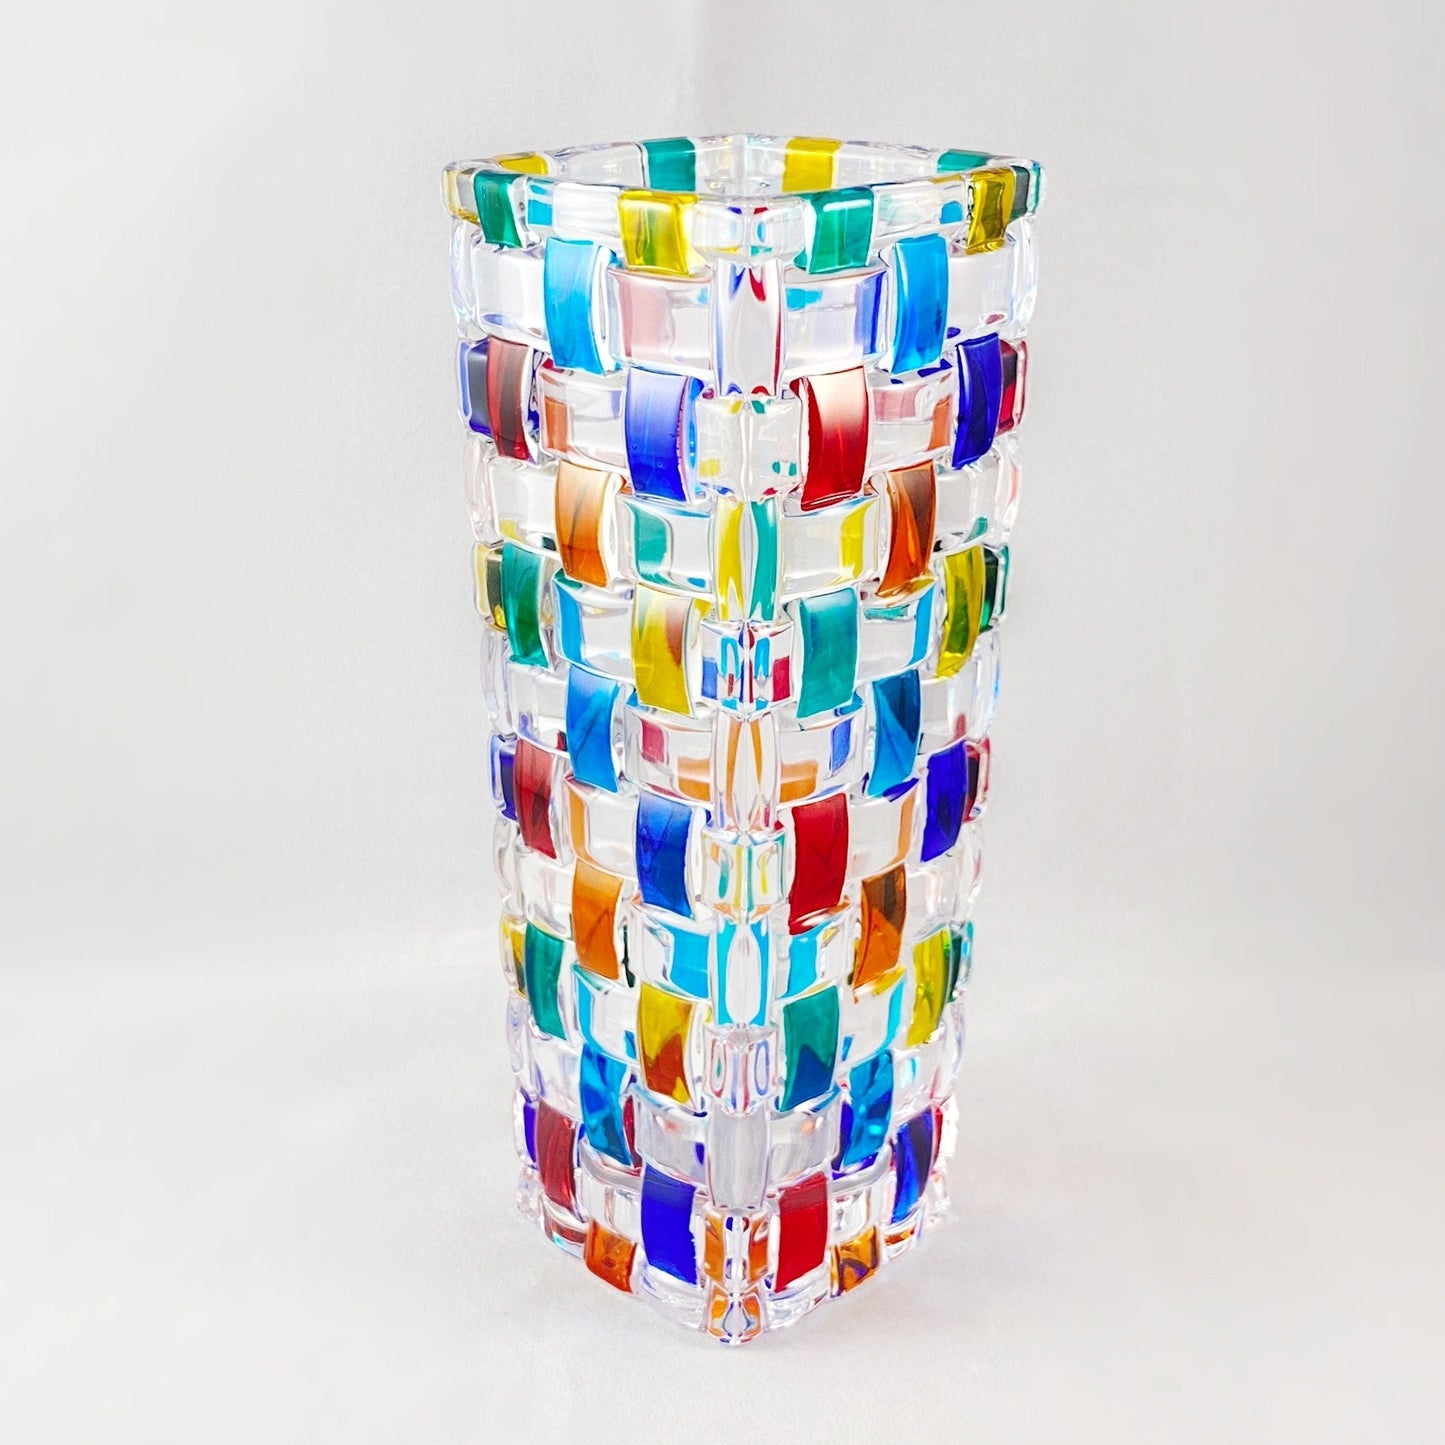 Venetian Glass Bassanova Bud Vase - Handmade in Italy, Colorful Murano Glass